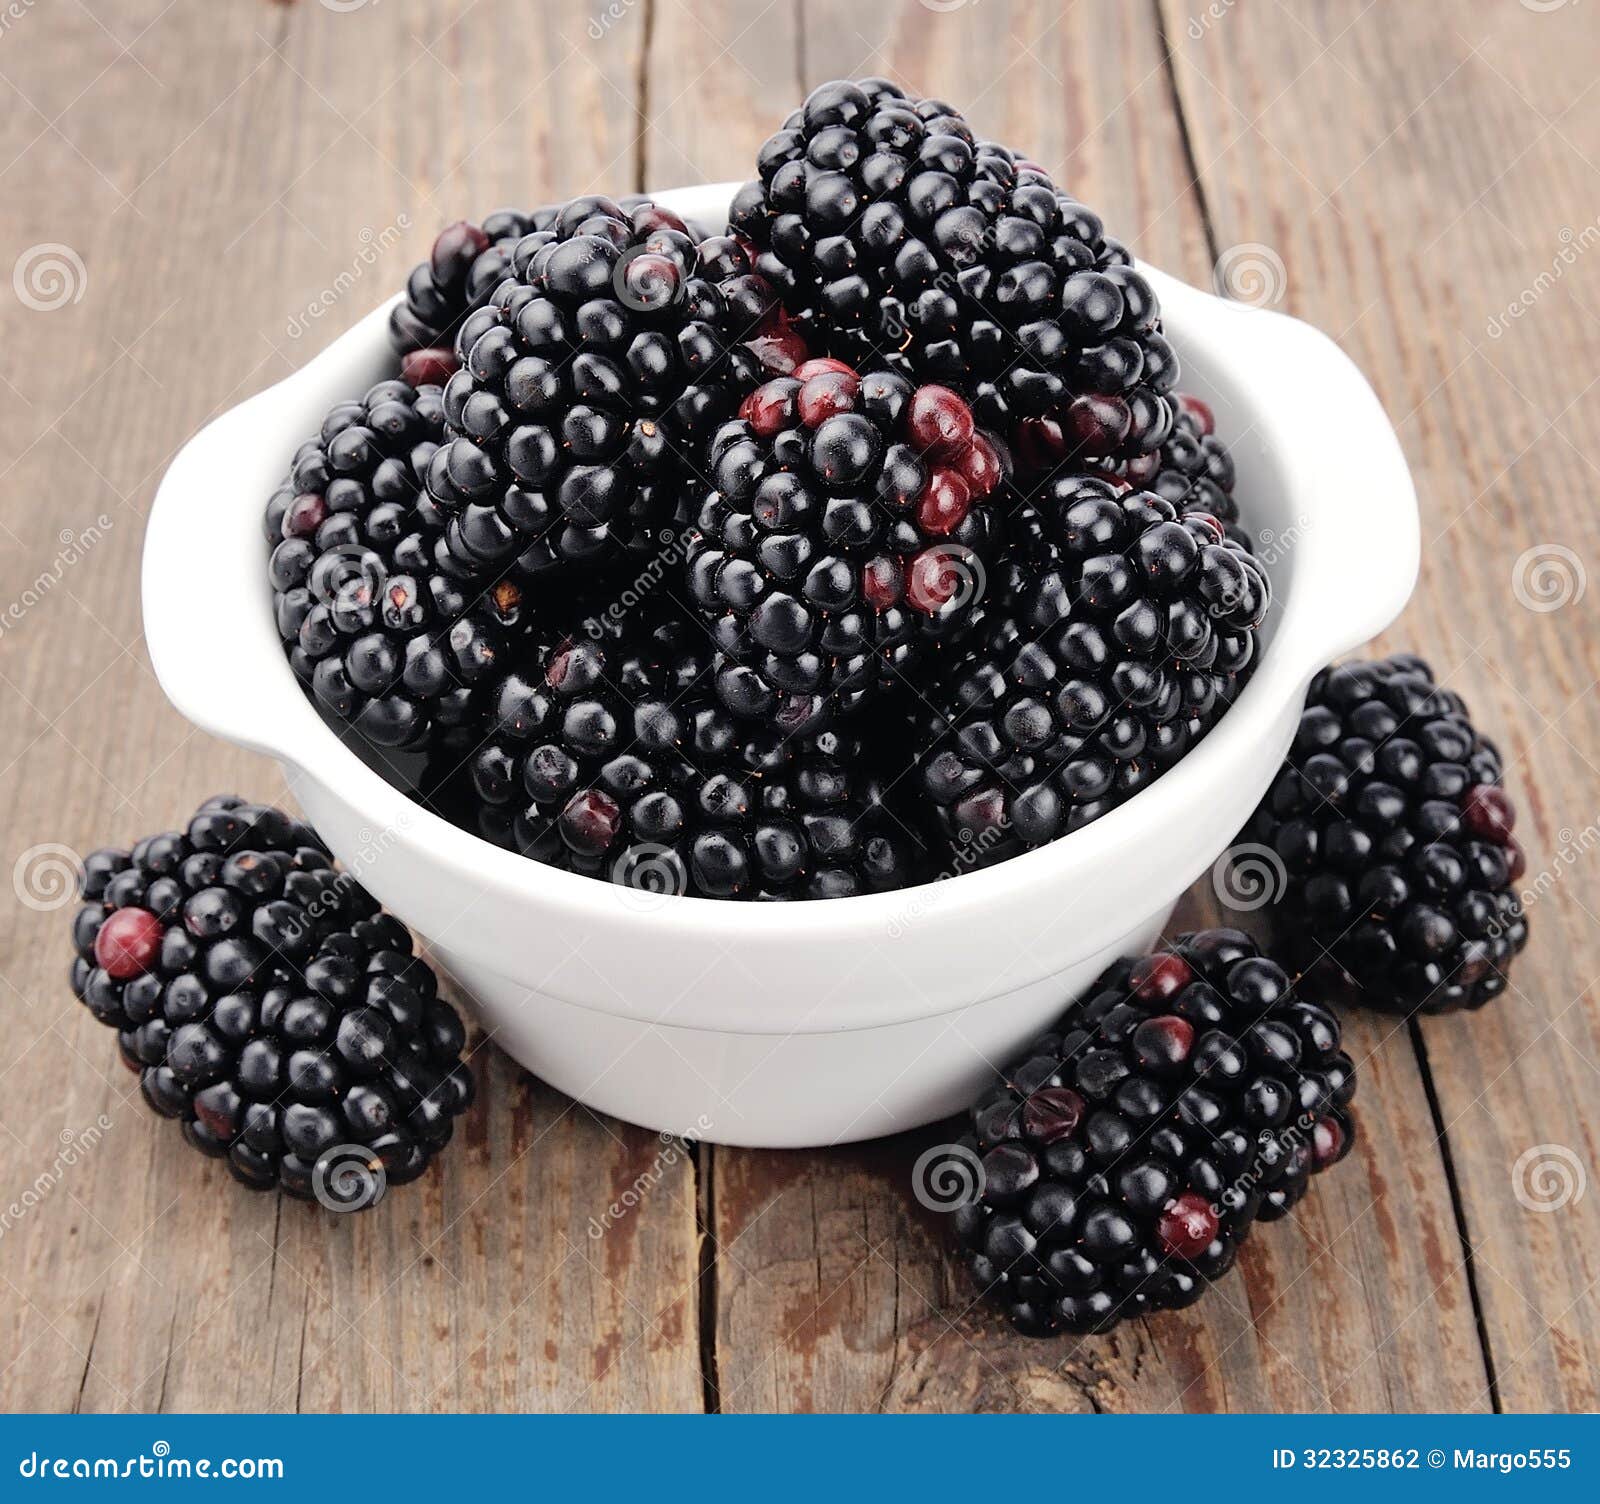 Blackberry fruit stock photo. Image of dewberry, green - 32325862